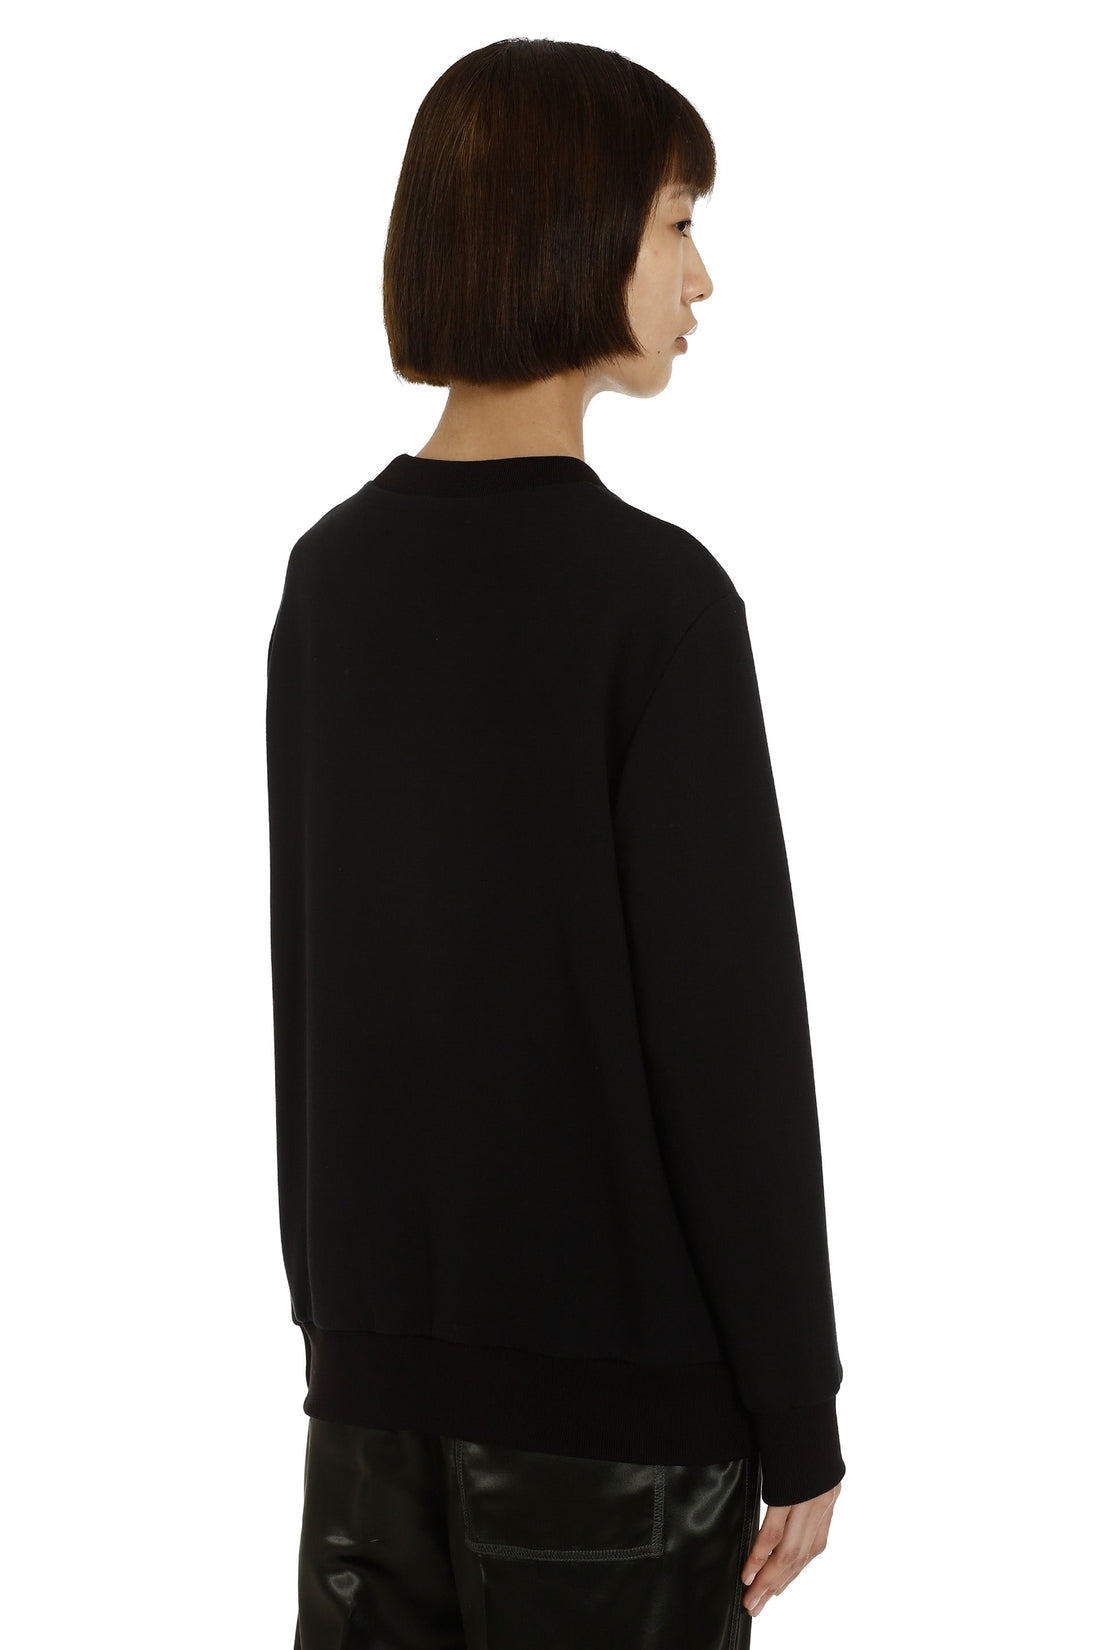 Versace-OUTLET-SALE-Printed oversize sweatshirt-ARCHIVIST